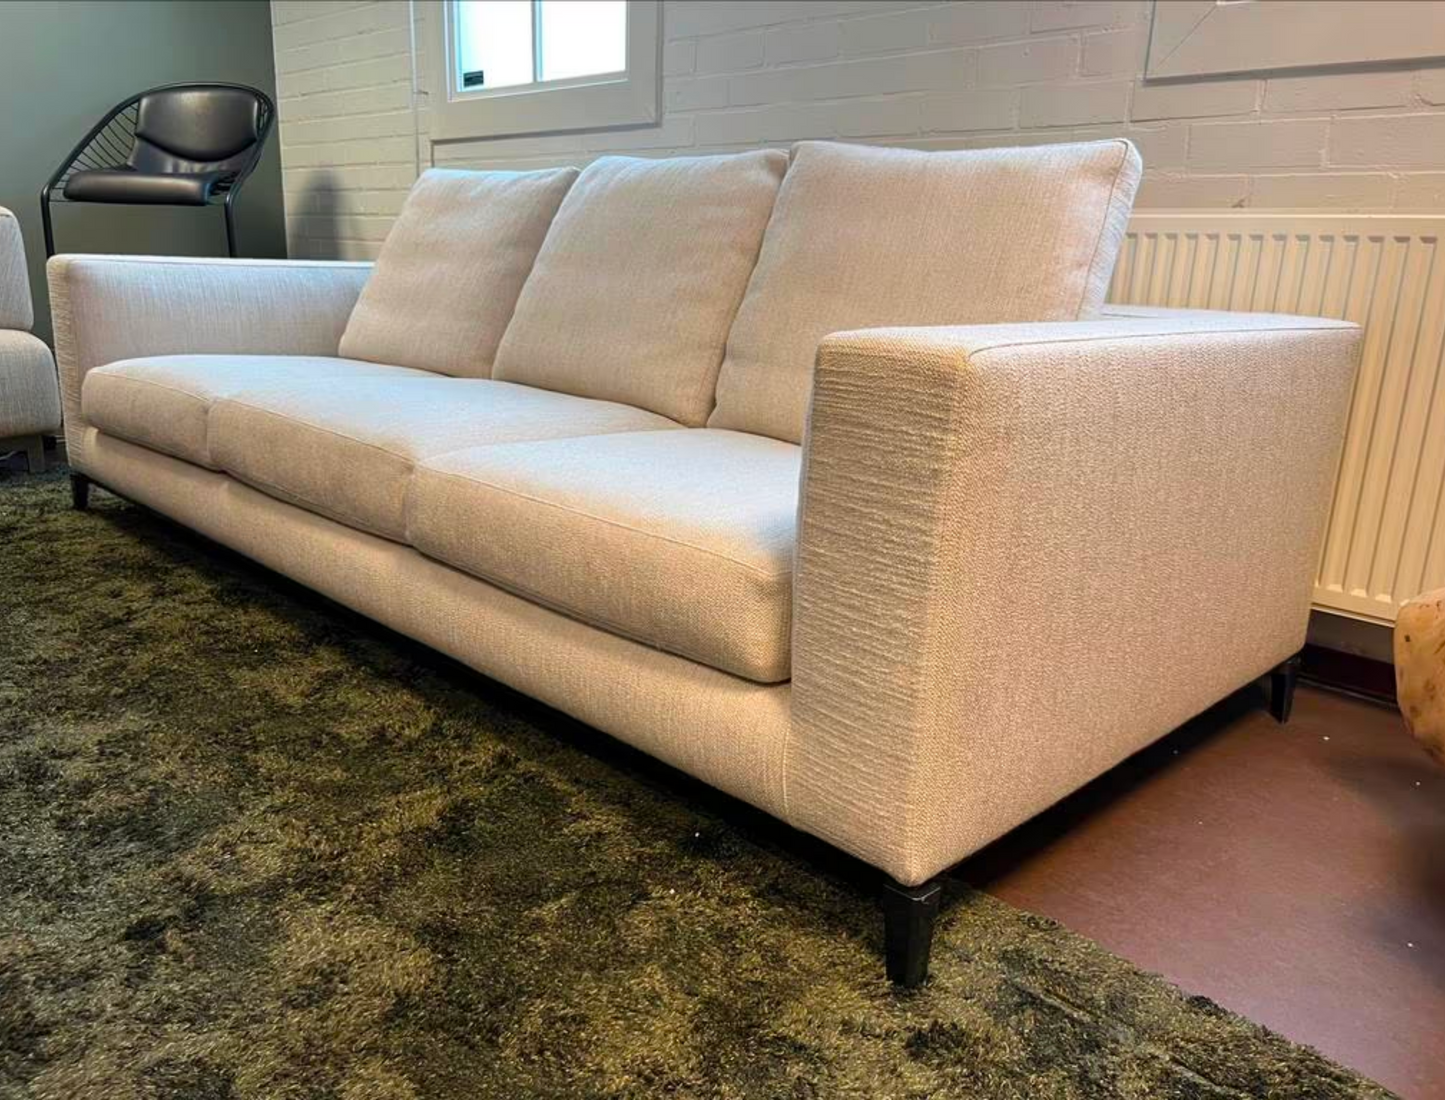 Zgan Minotti Andersen sofa 103x246cm in stof ecru beige